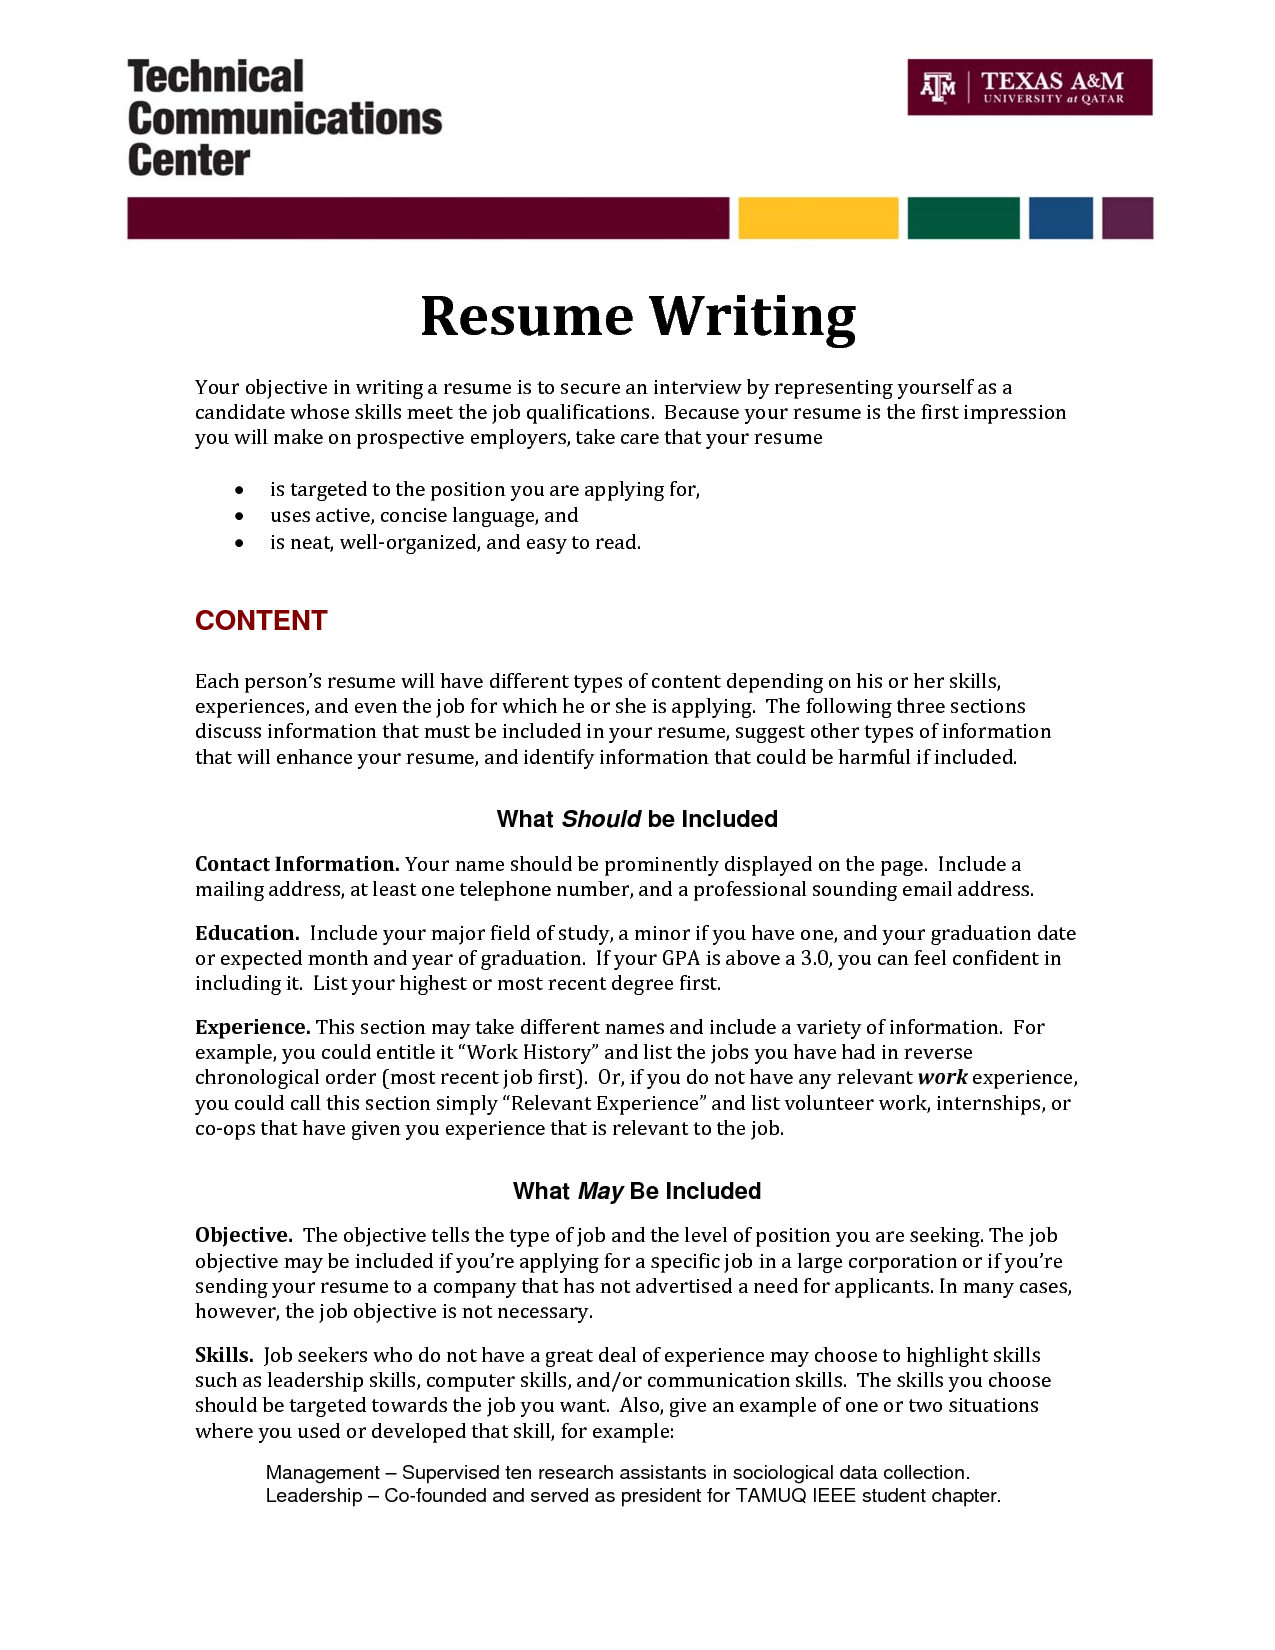 How To Write A Resume?